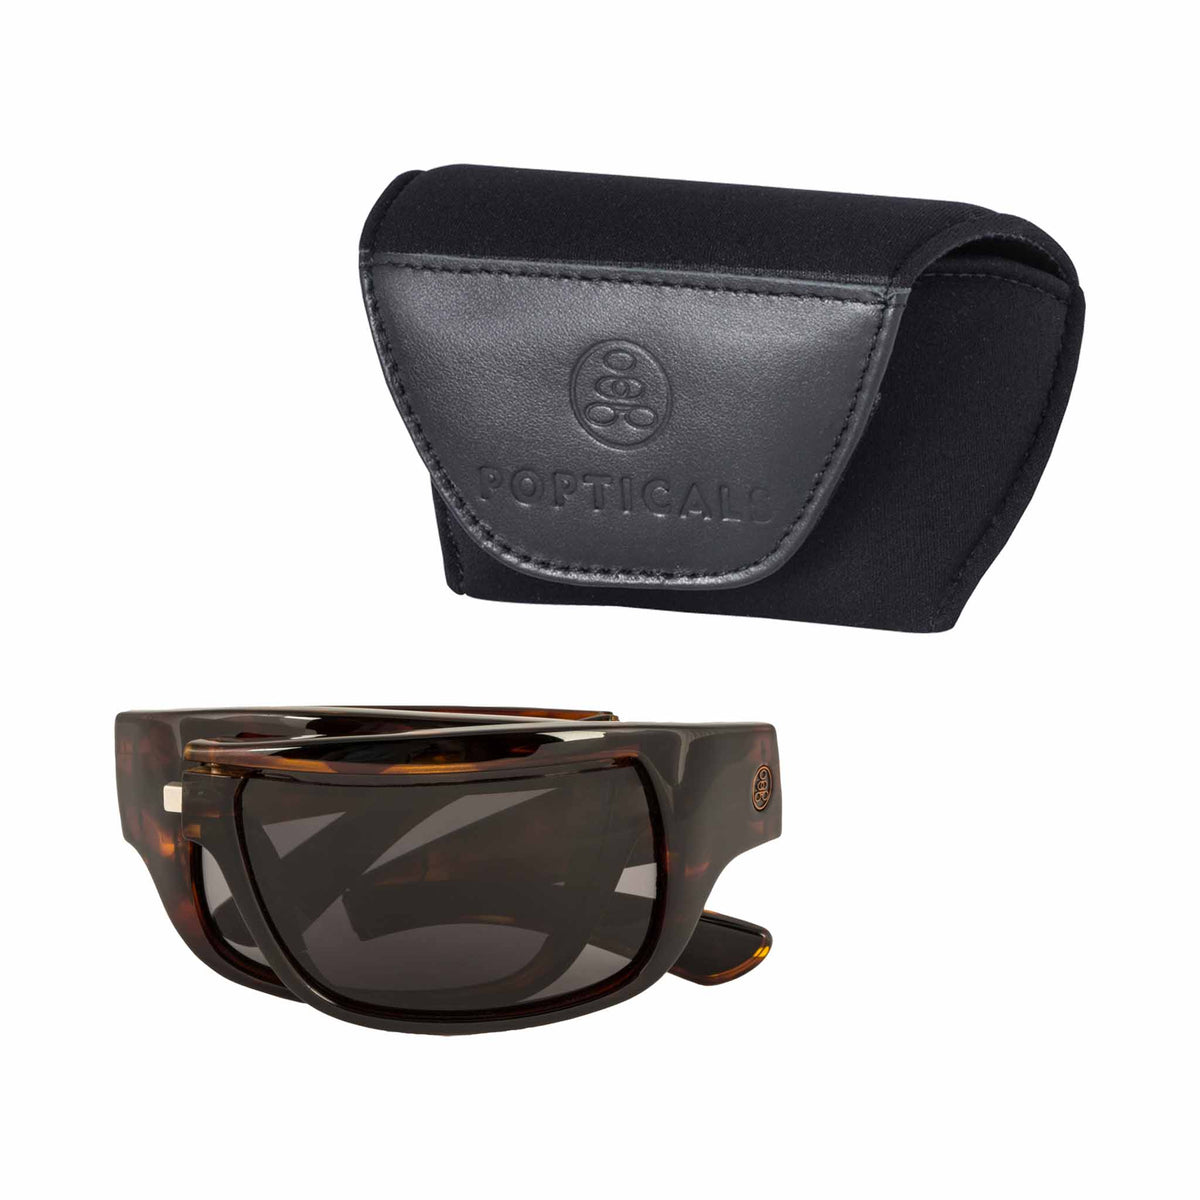 Popticals, Premium Compact Sunglasses, PopH2O, 010070-CTGP, Polarized Sunglasses, Gloss Tortoise Frame, Gray Lenses, Case View